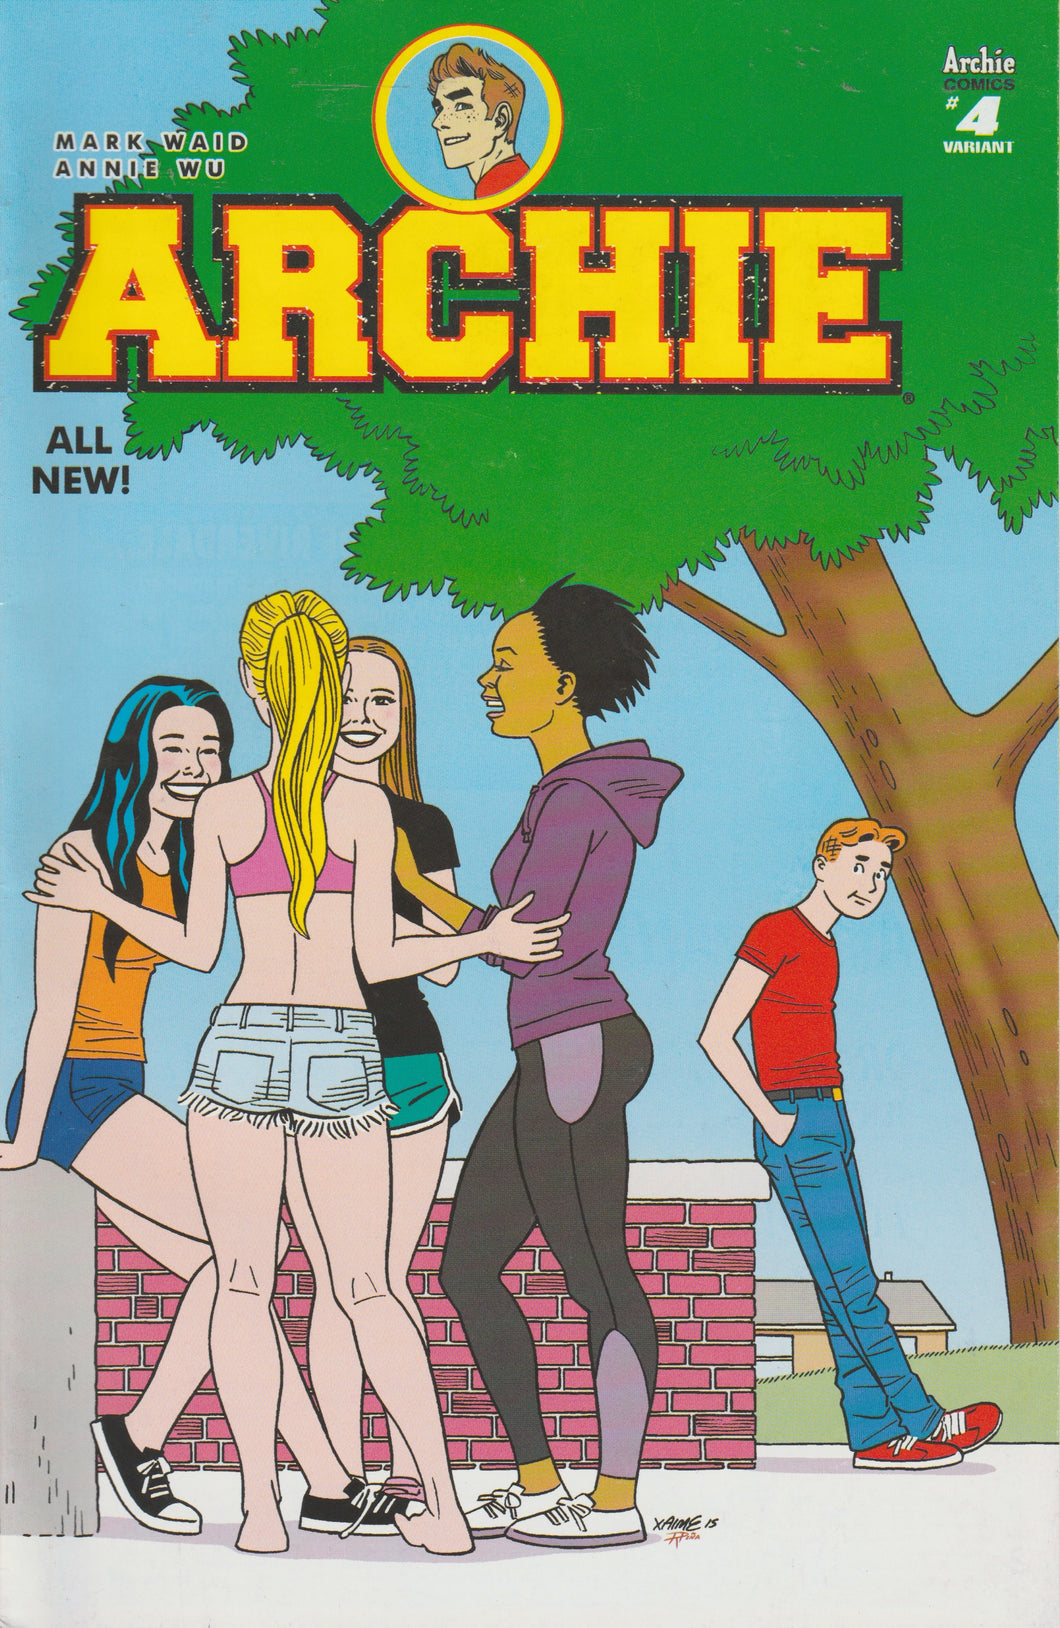 Archie #4 (Variant)